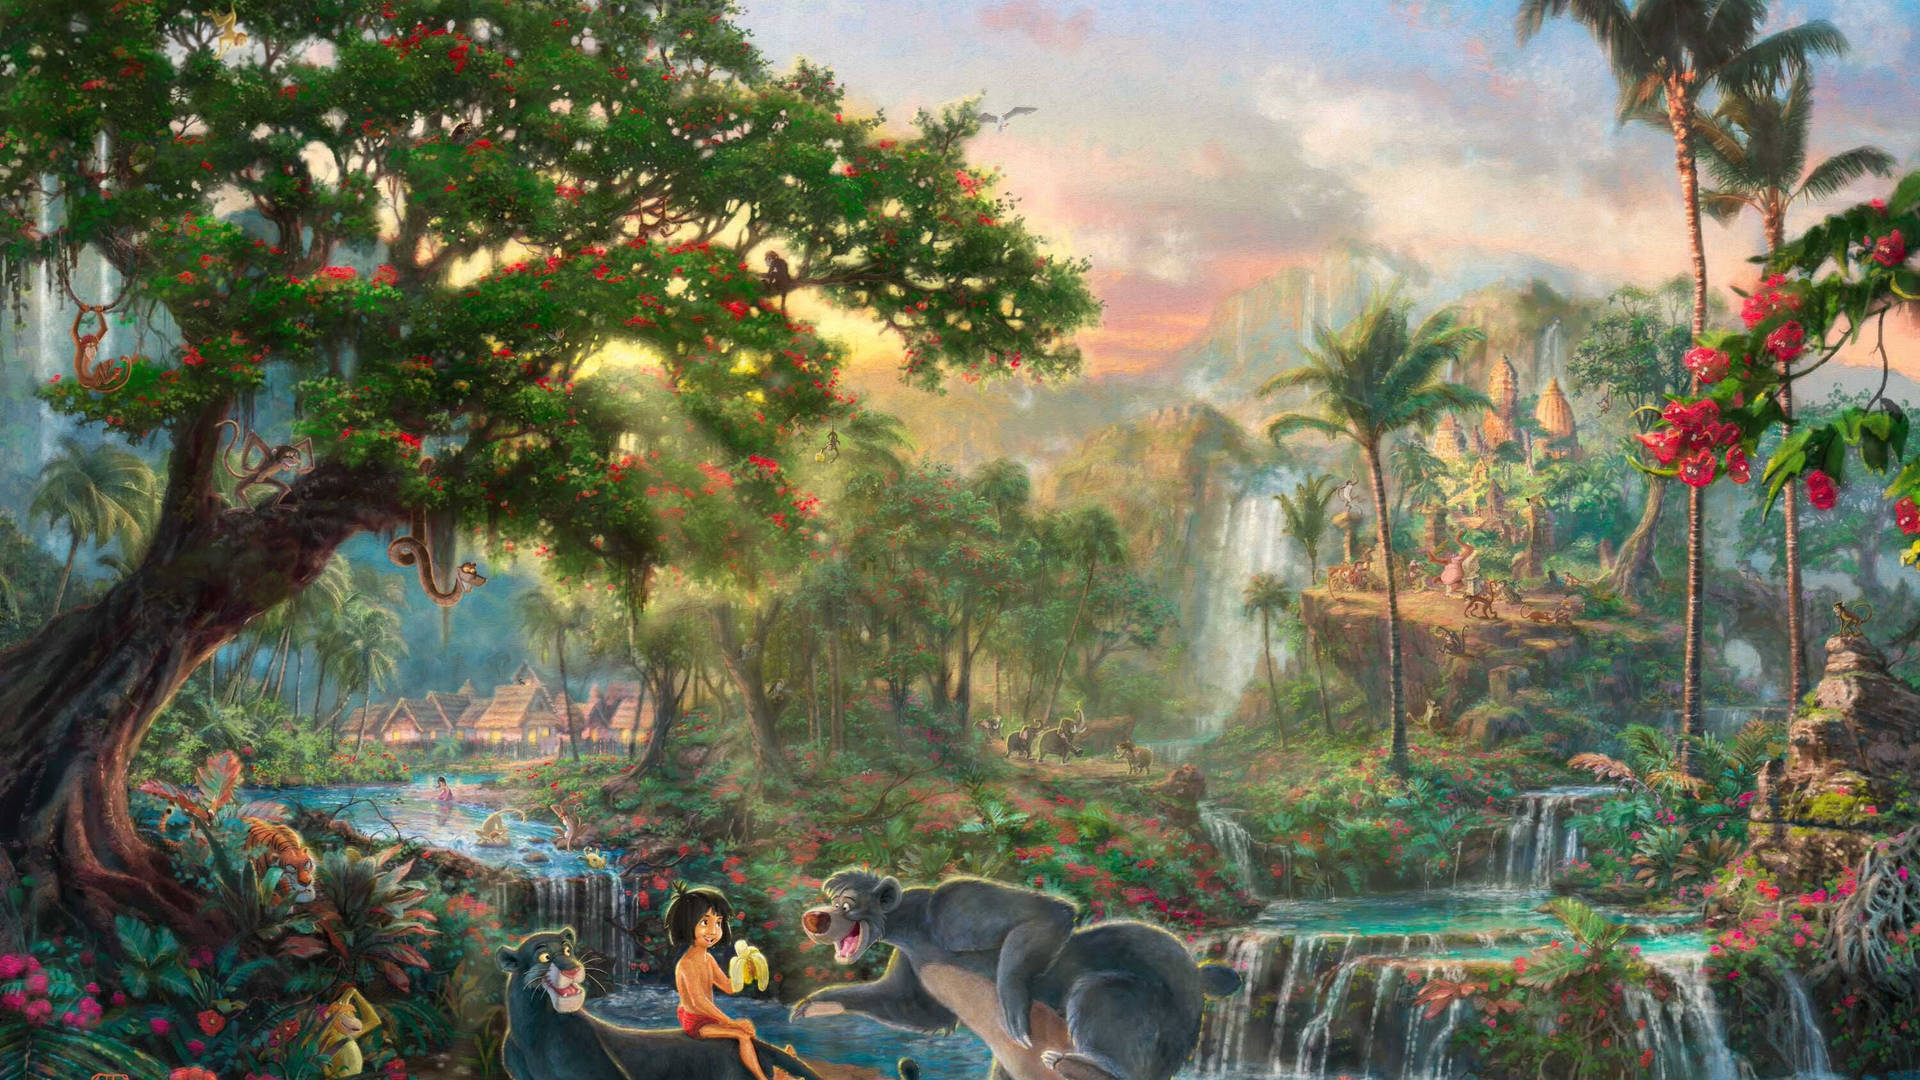 2560x1440 Disney The Jungle Book